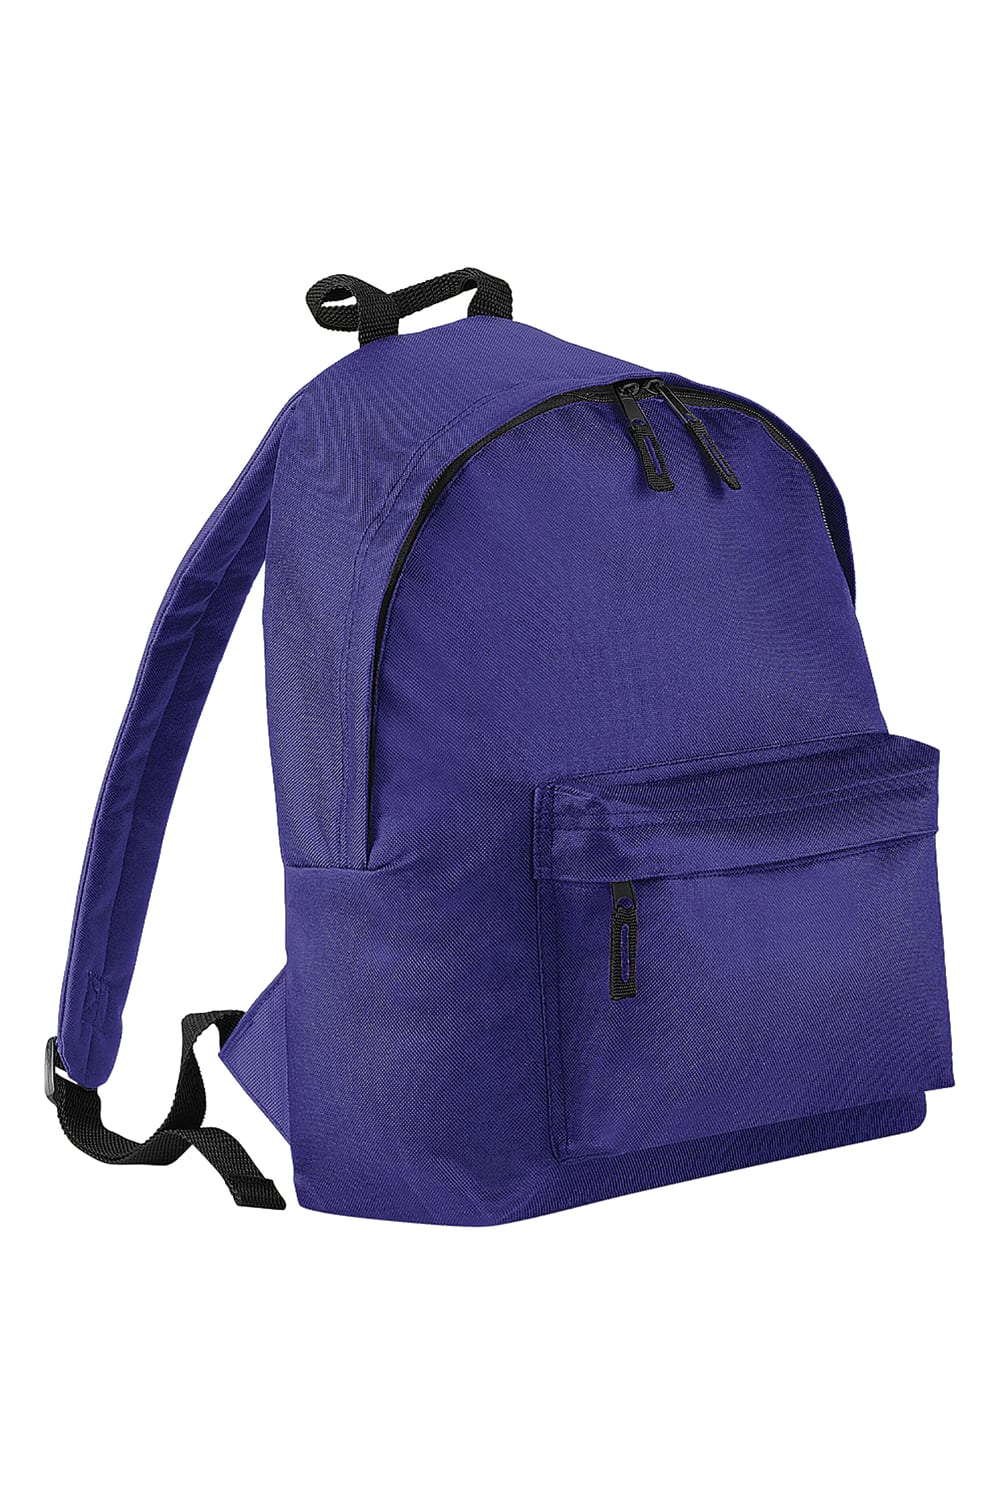 Fashion Backpack/Rucksack,18 Liters Pack Of 2 - Purple